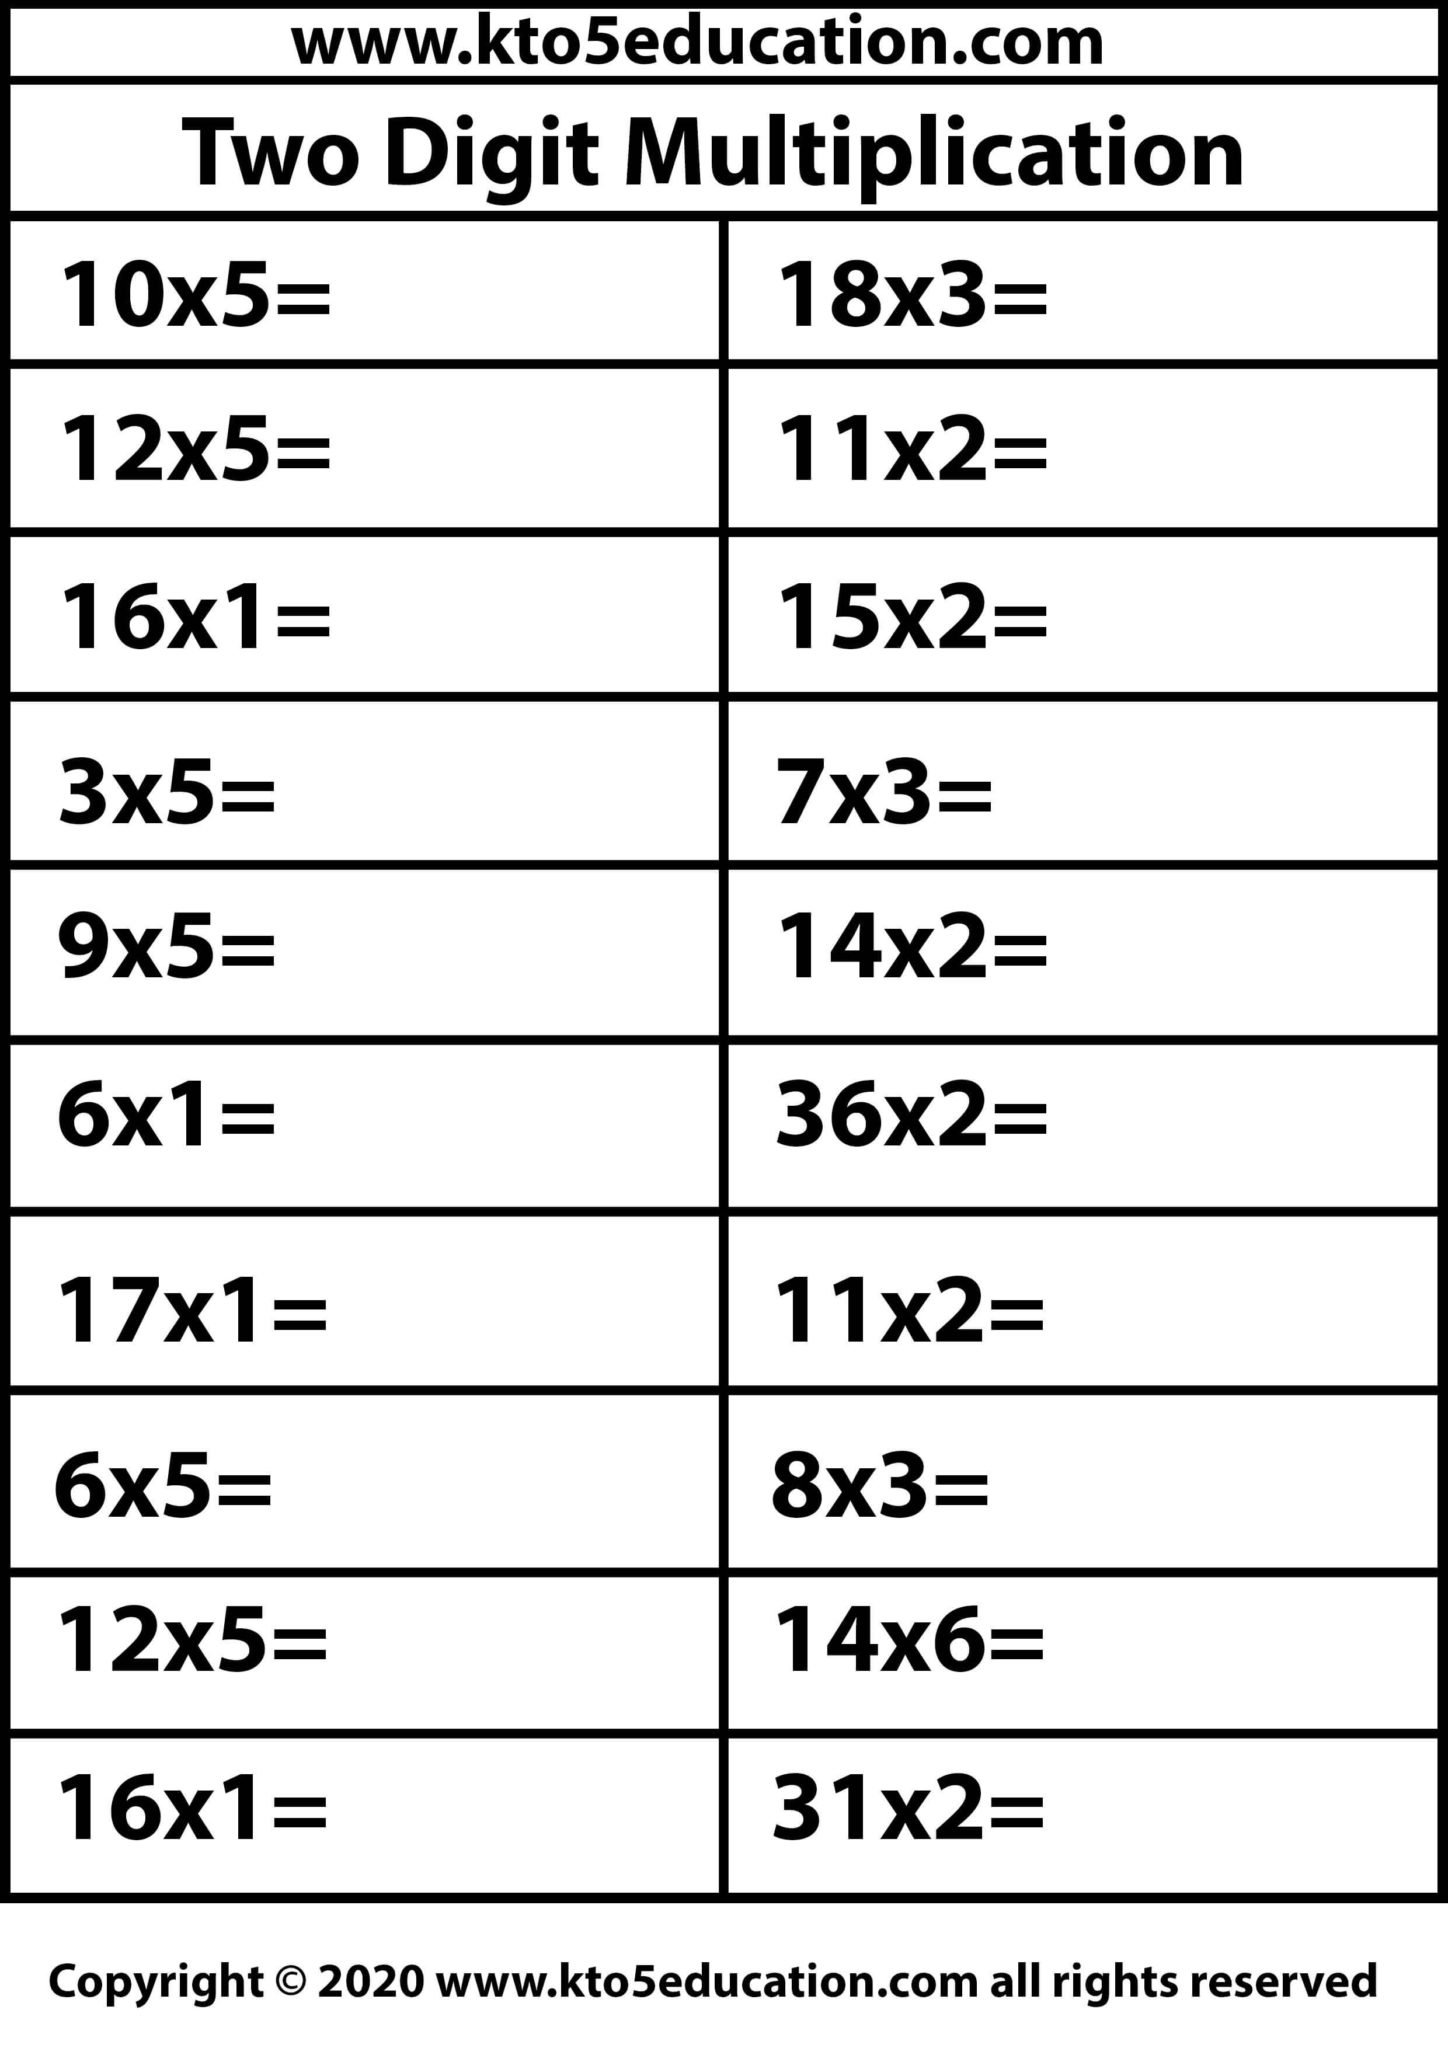 Two Digit Multiplication Worksheet 1 Kto5Education Free